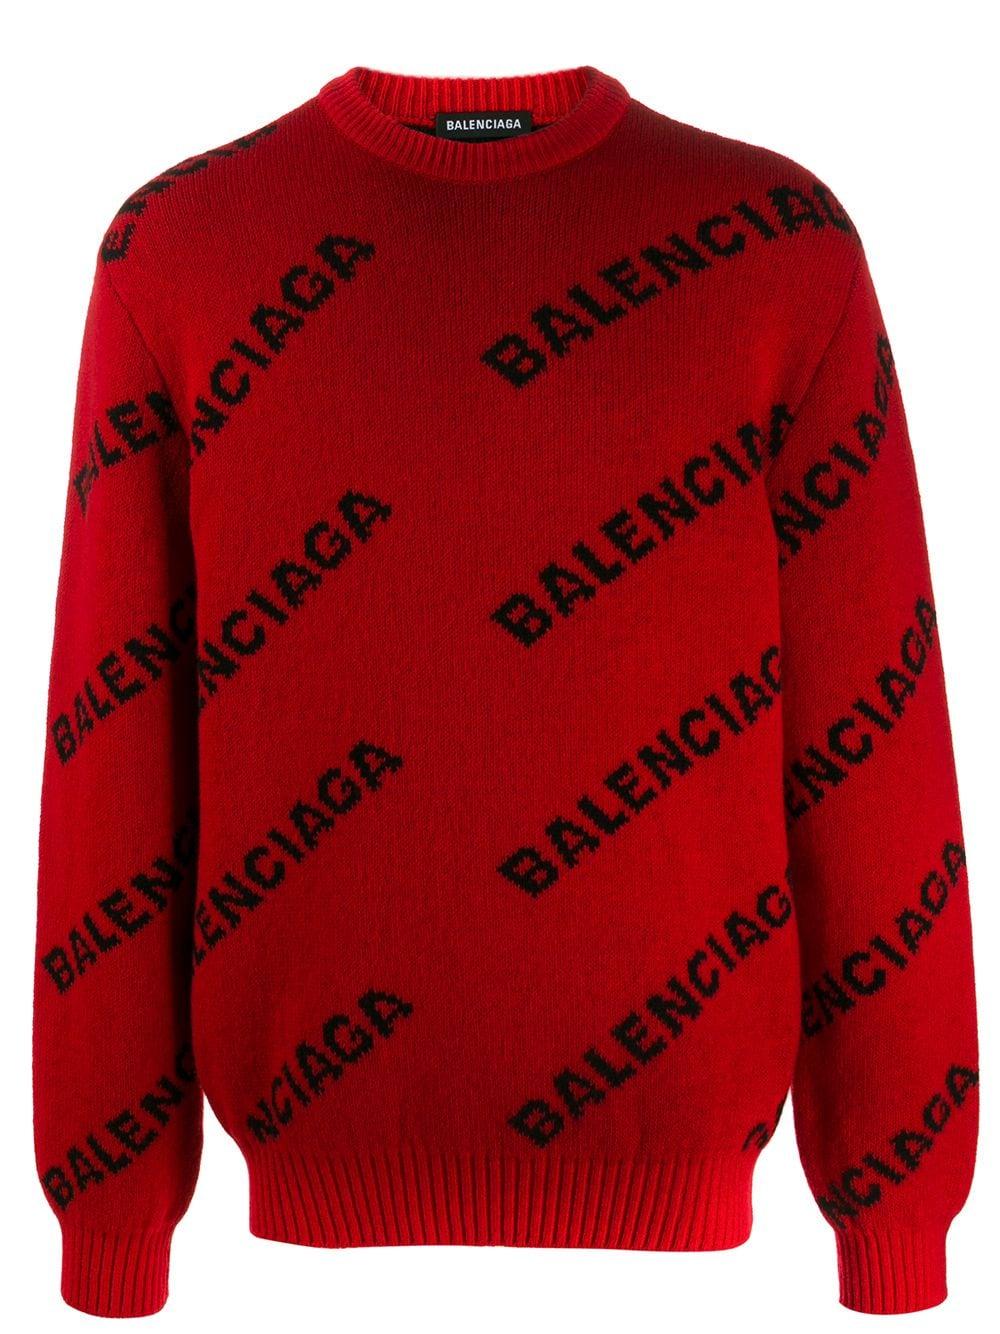 balenciaga red sweater